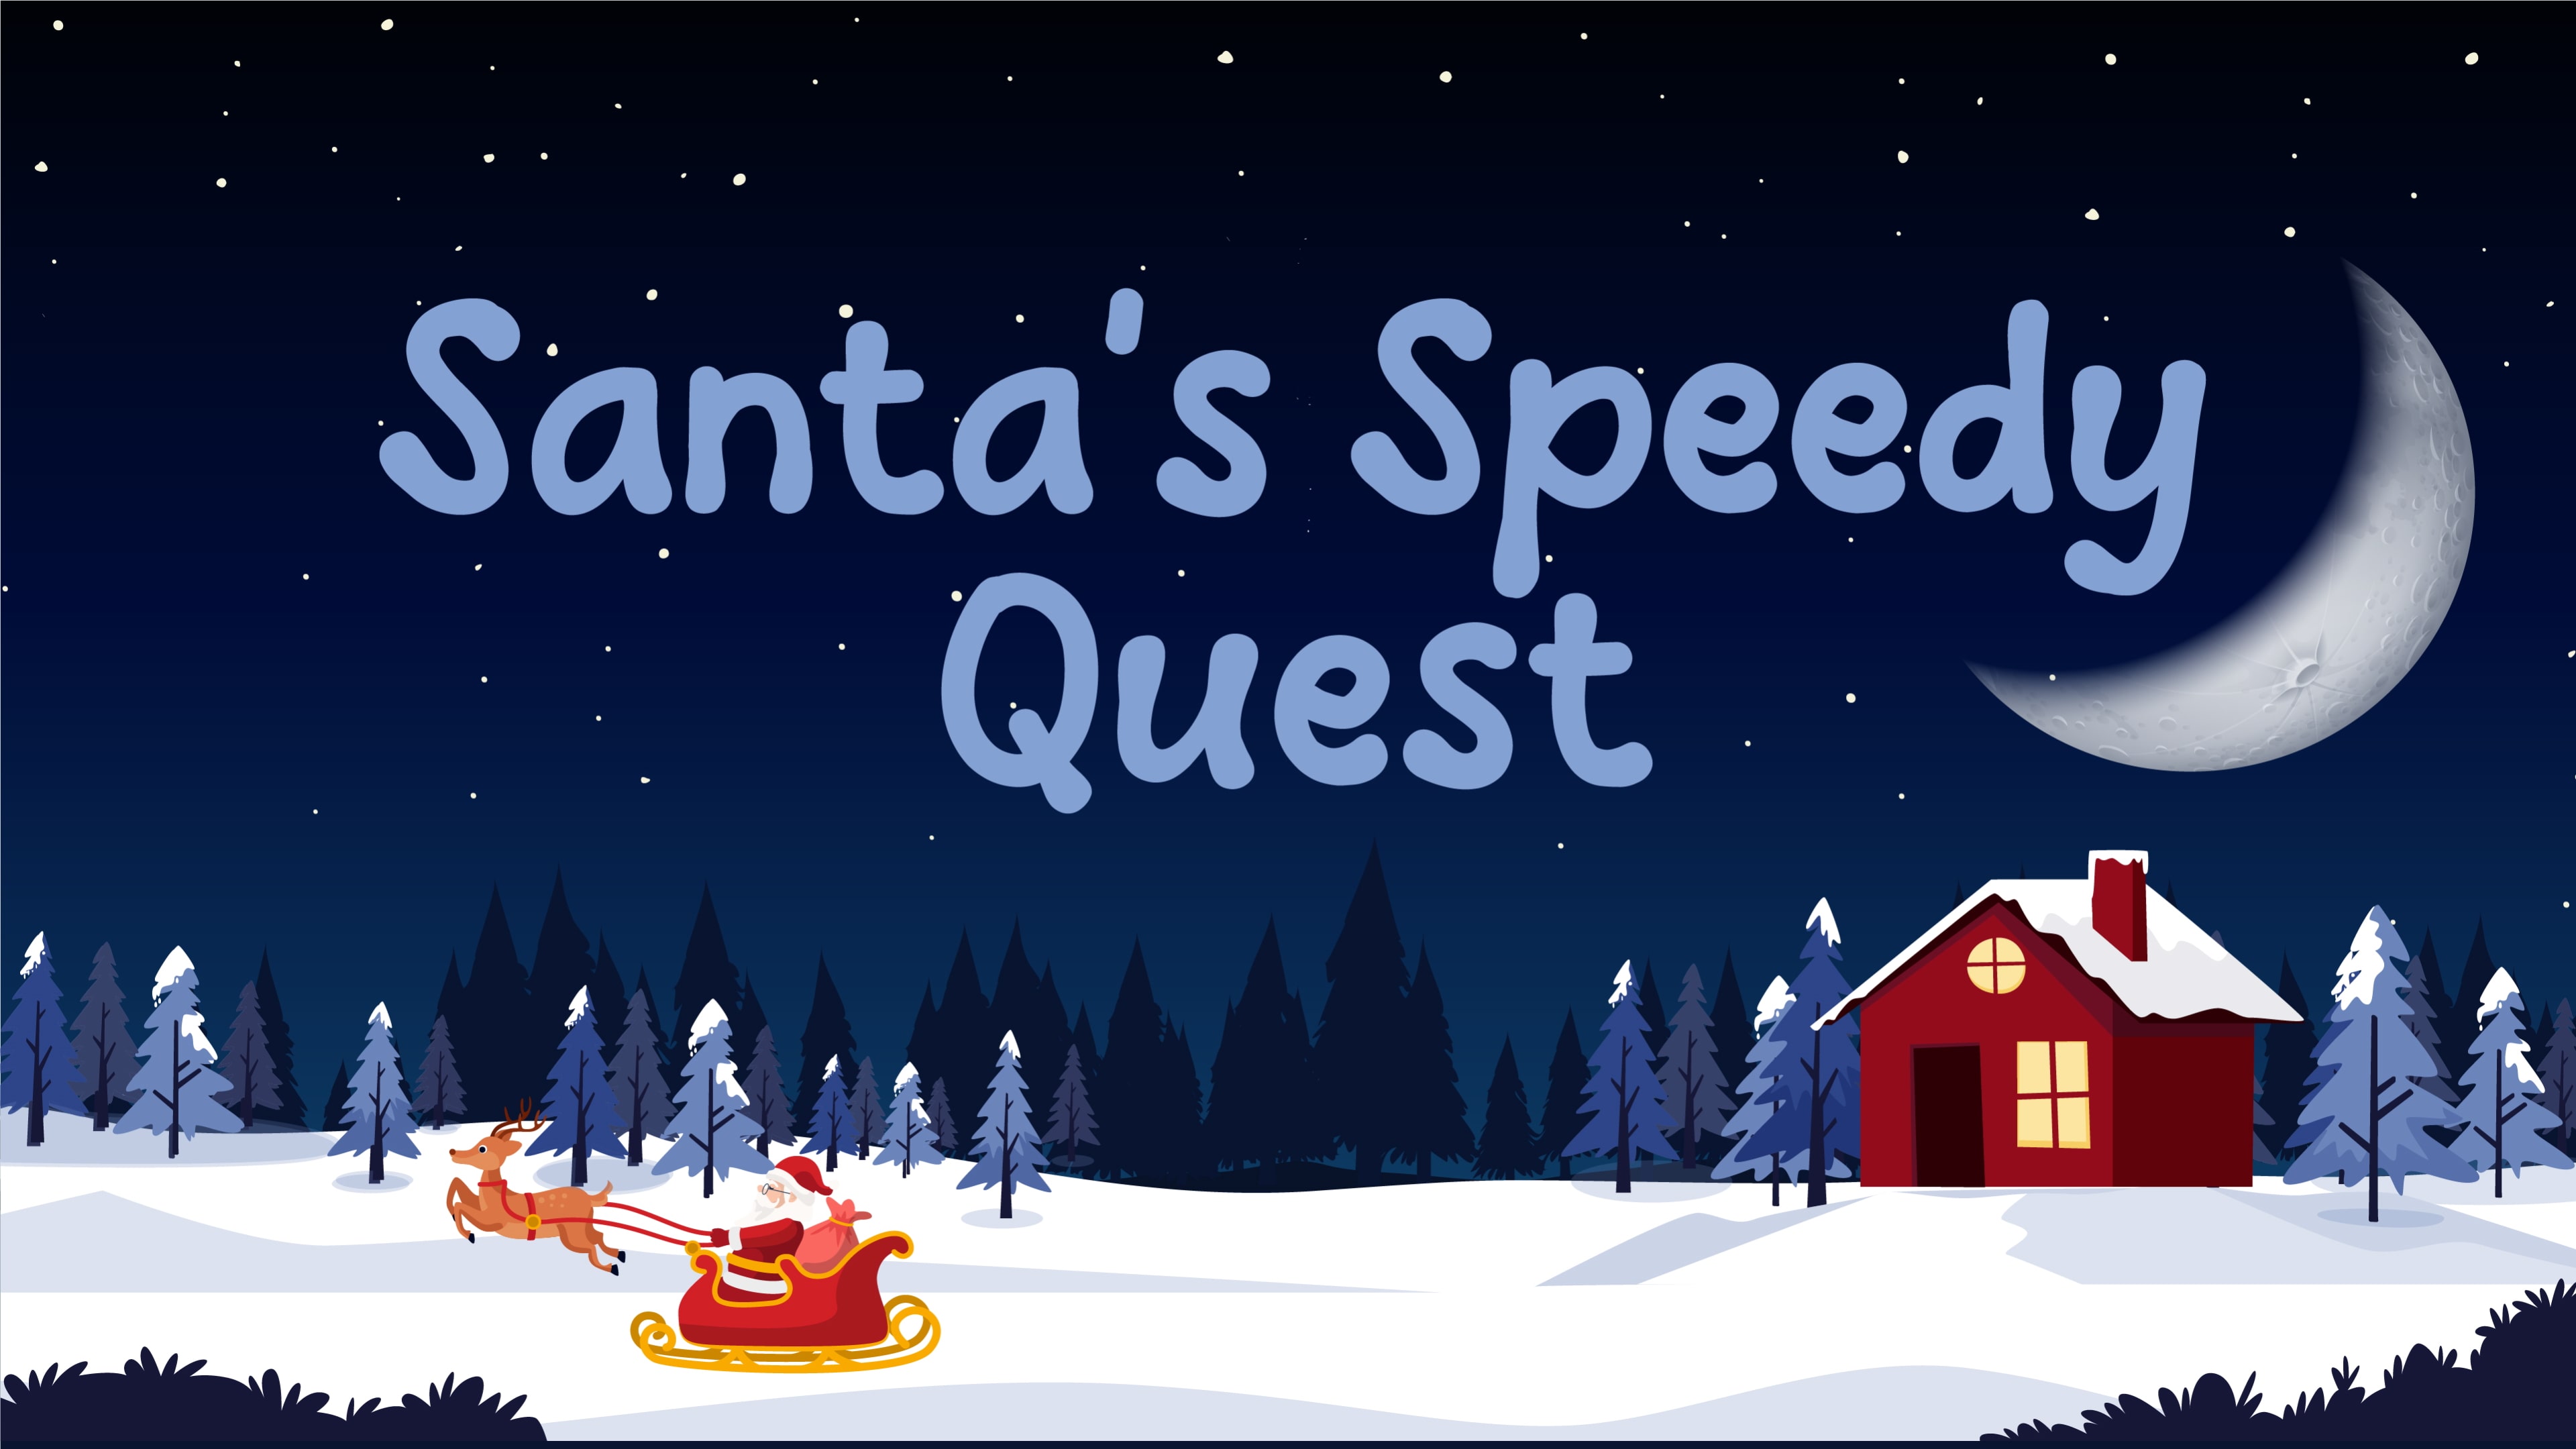 Santa's Speedy Quest (English, Korean, Japanese)